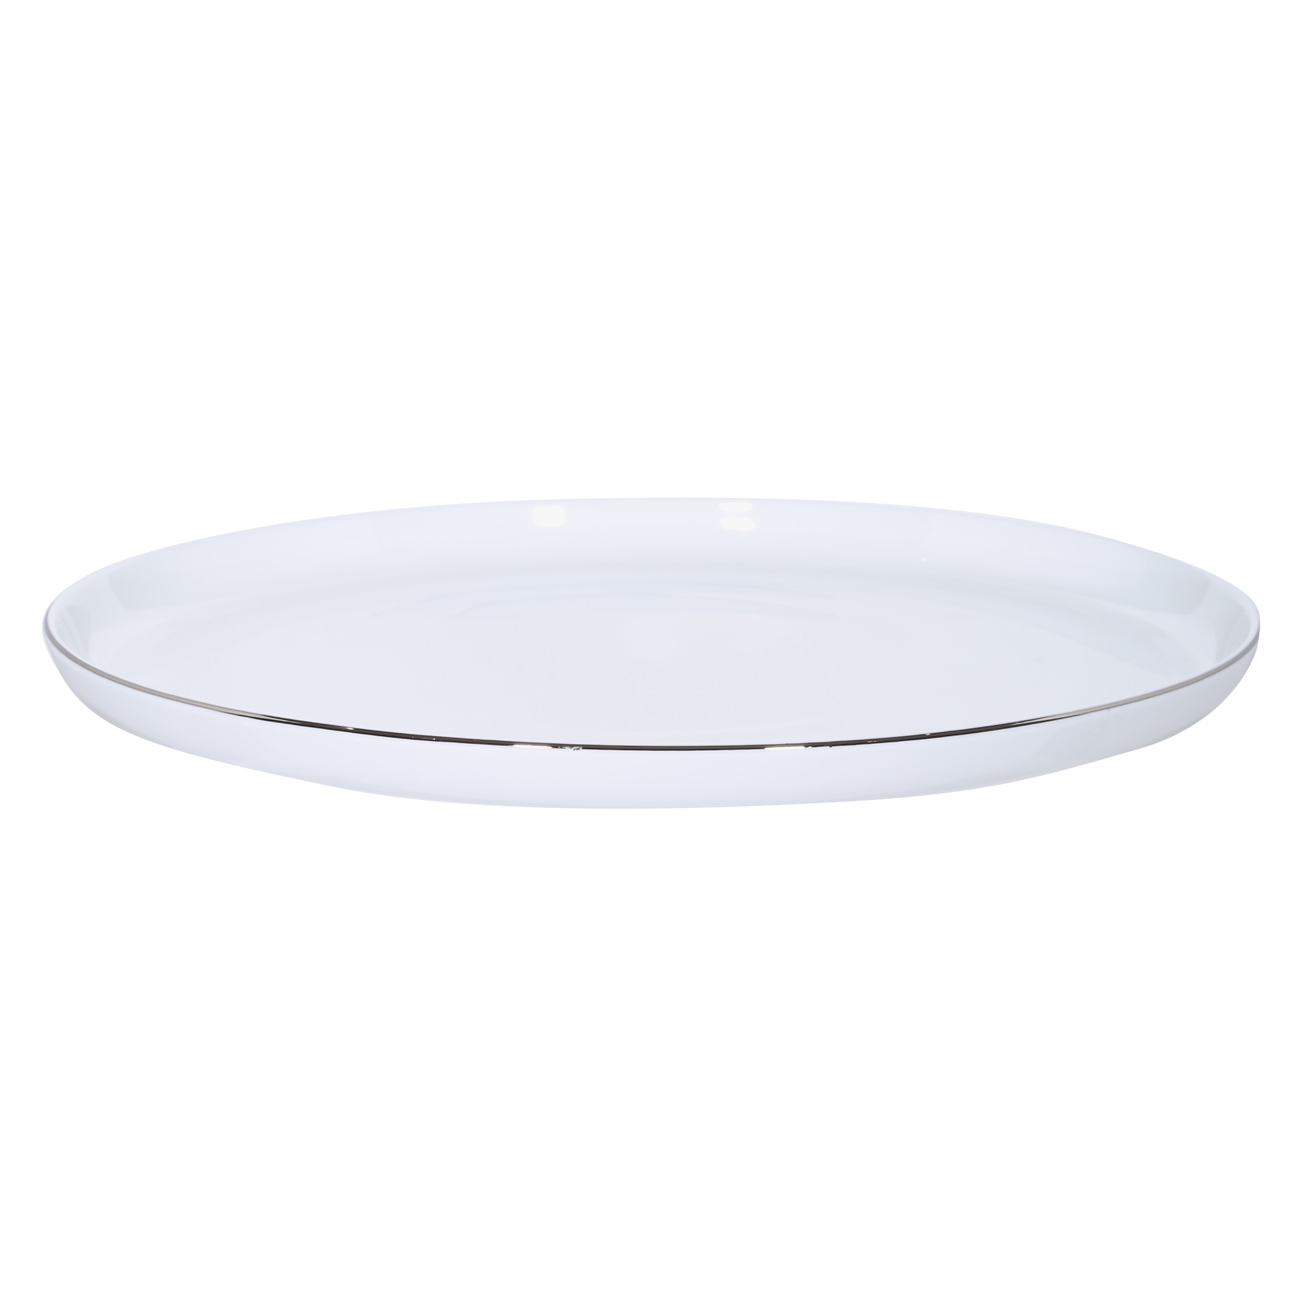 Тарелка обеденная, 26 см, фарфор F, белая, Ideal silver